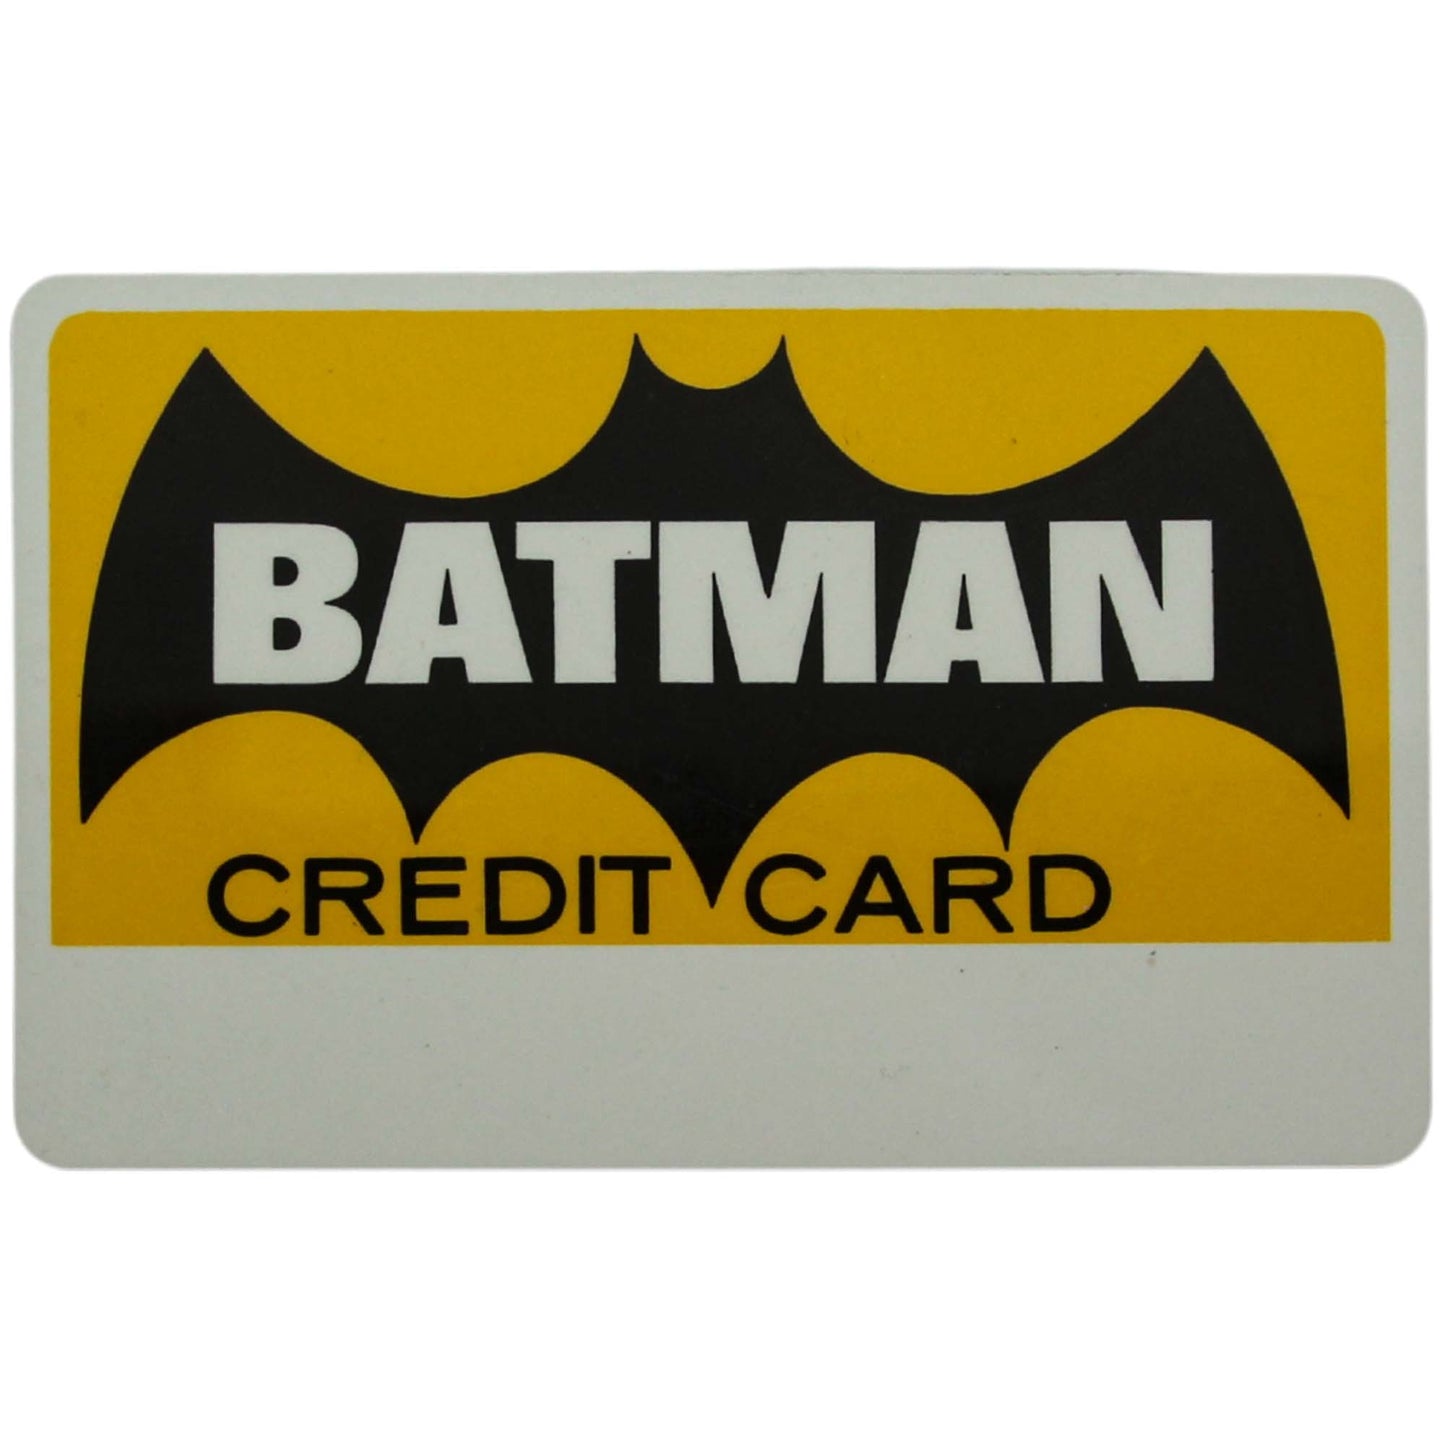 Batman Credit Card ZOOM